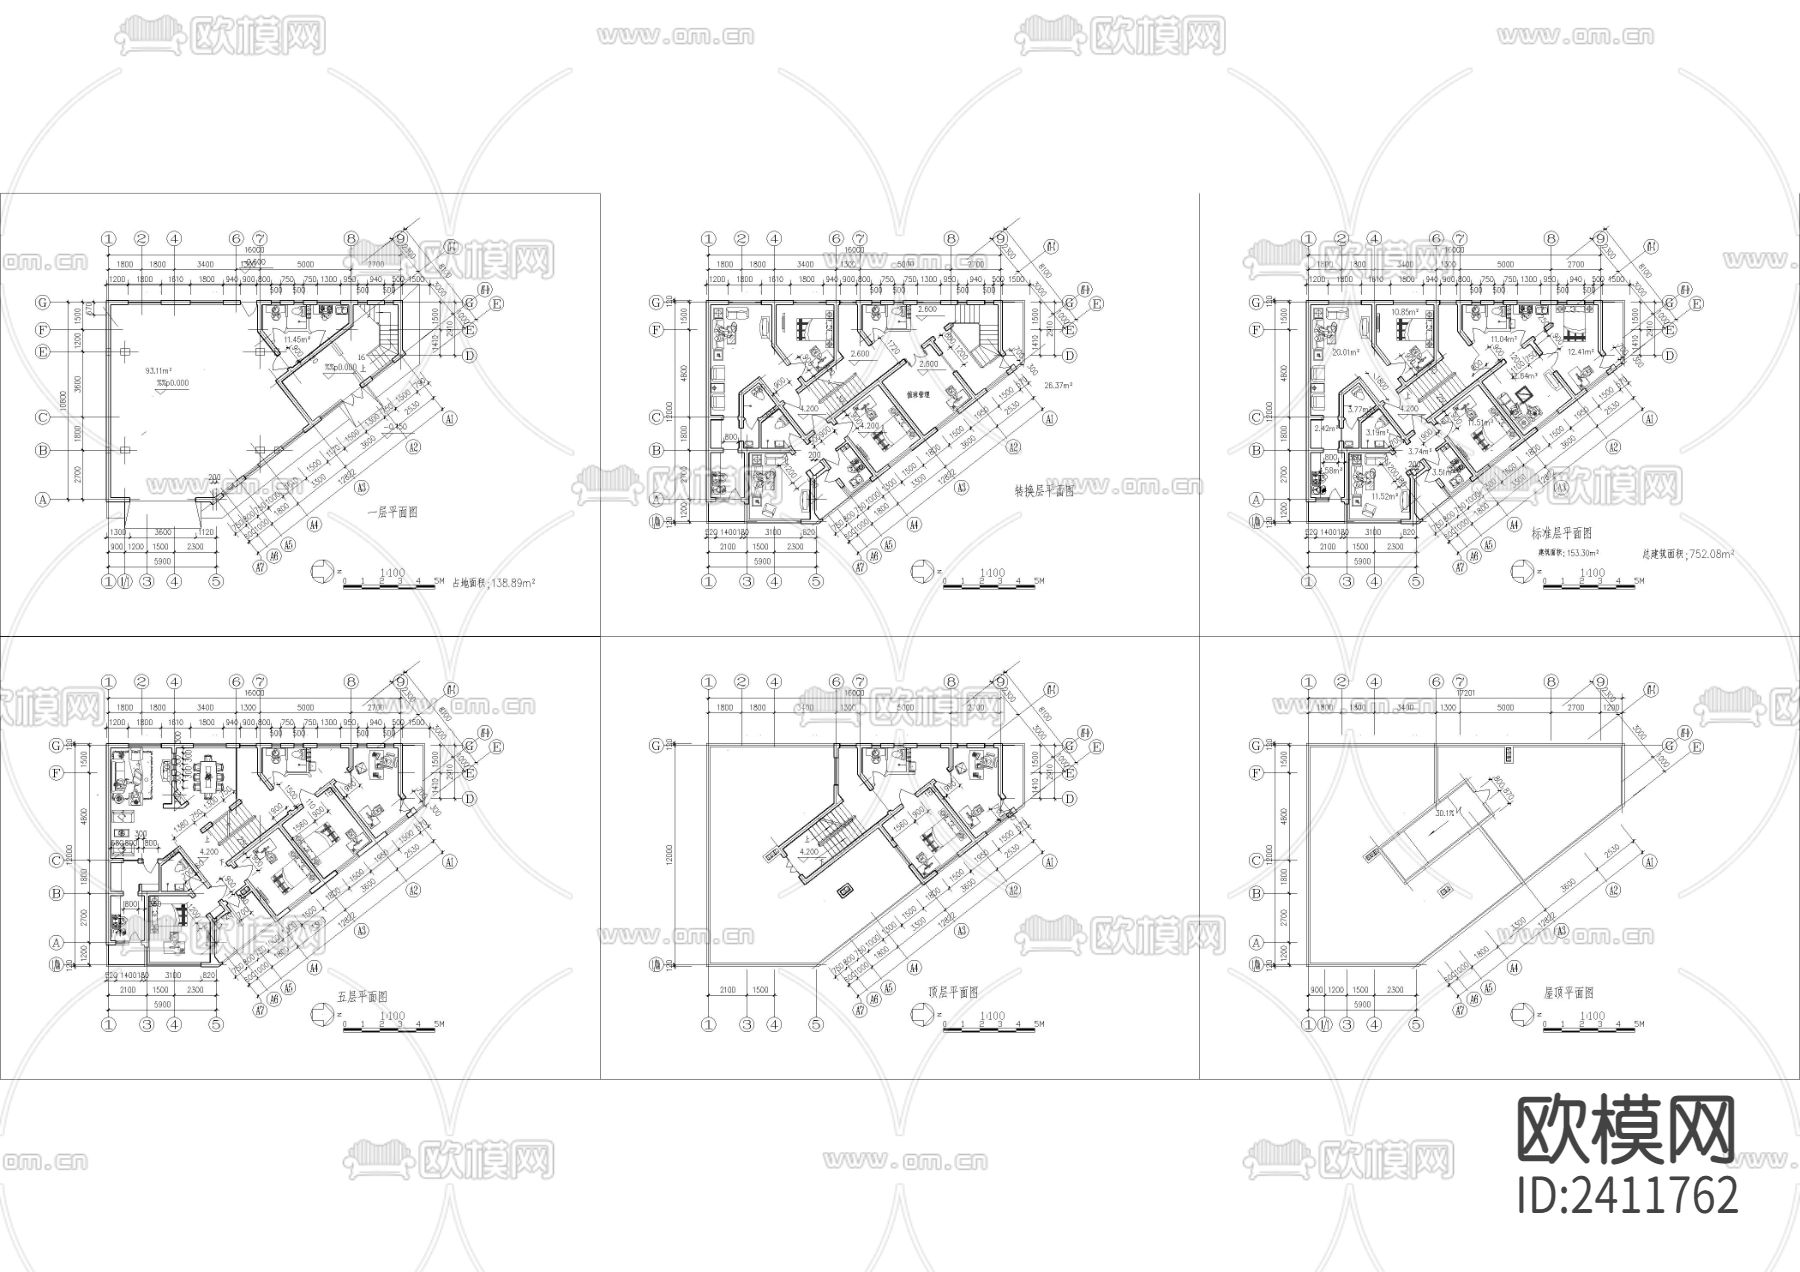 QH2031网红三间两层新中式农村宅基地自建房设计图二层小楼别墅设计图纸 - 青禾乡墅科技